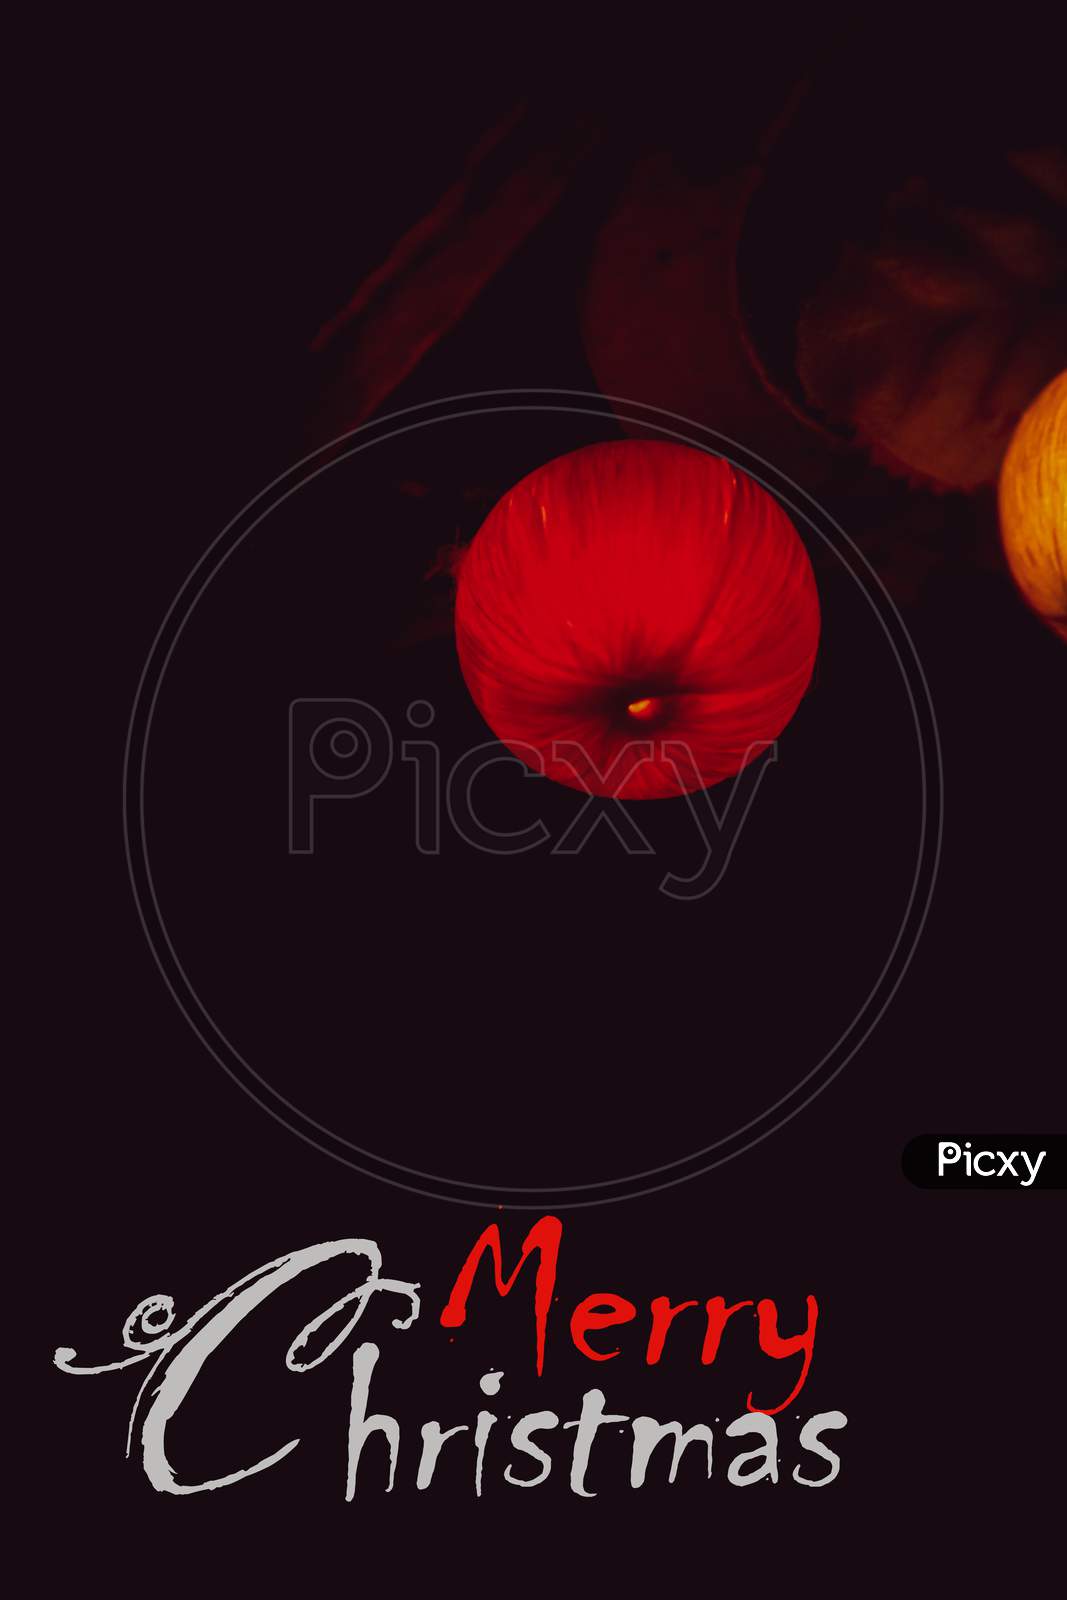 Merry Christmas wish card lantern on a black background